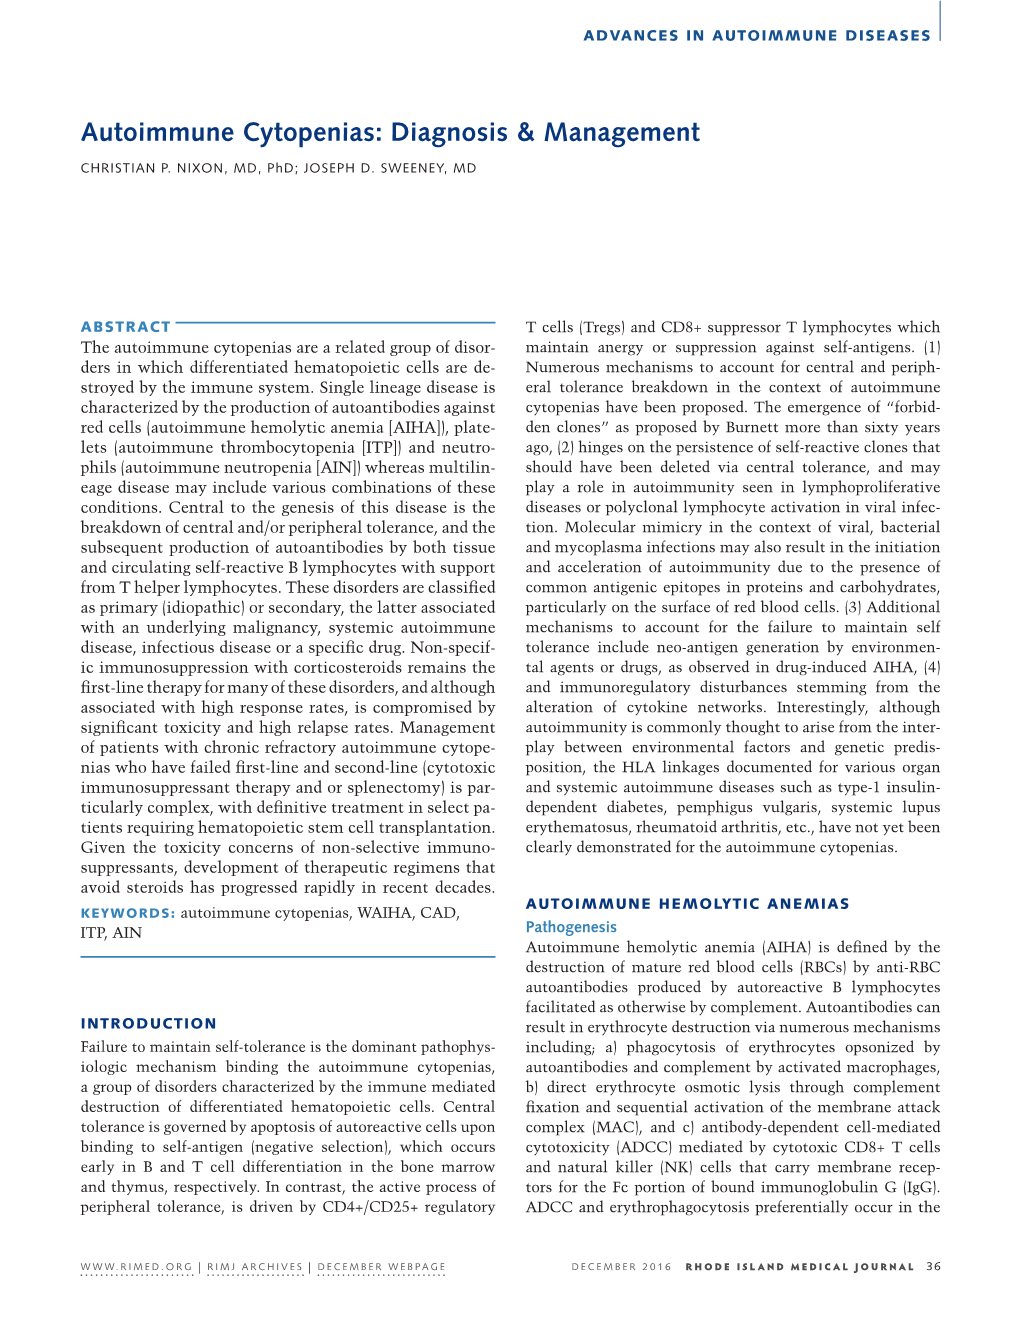 Autoimmune Cytopenias: Diagnosis & Management